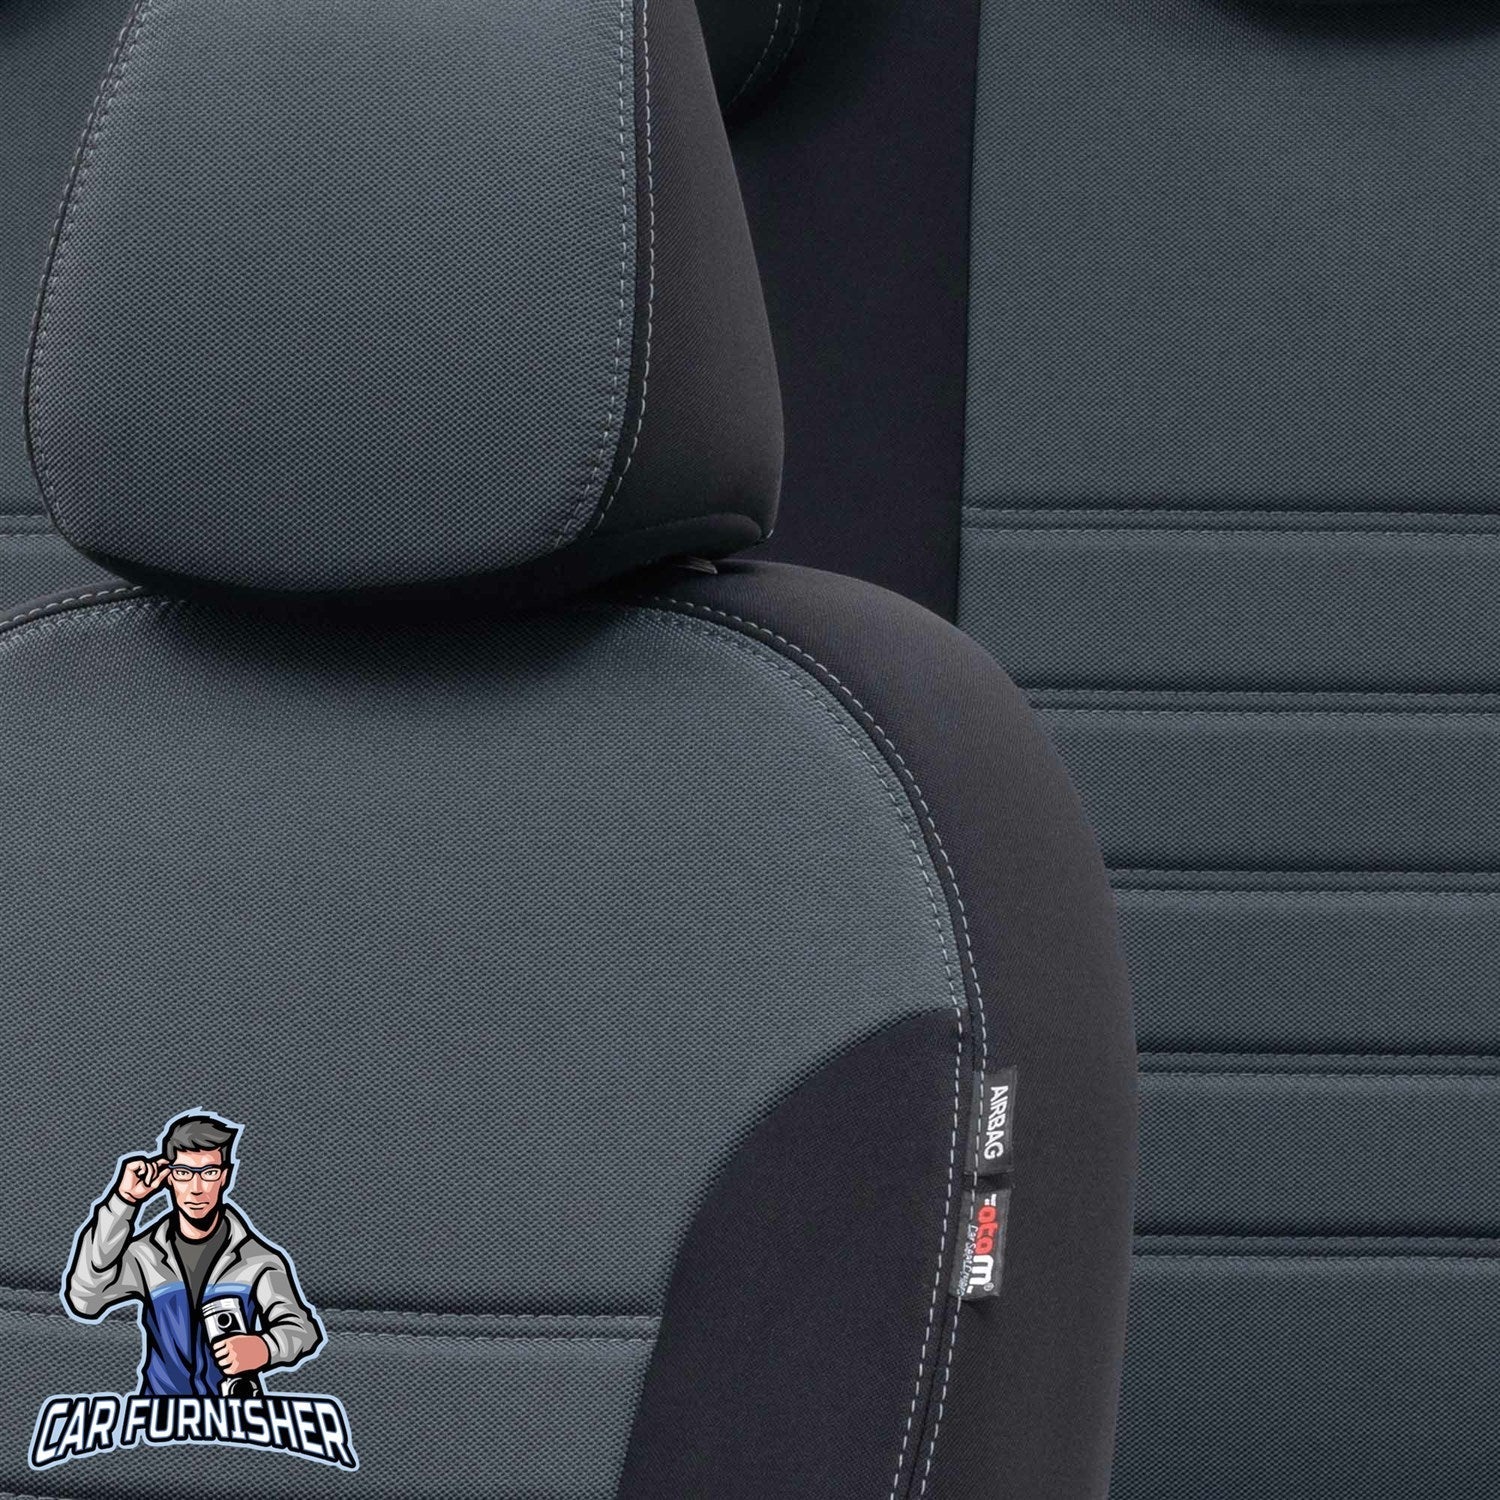 Peugeot Expert Seat Covers Original Jacquard Design Smoked Black Jacquard Fabric